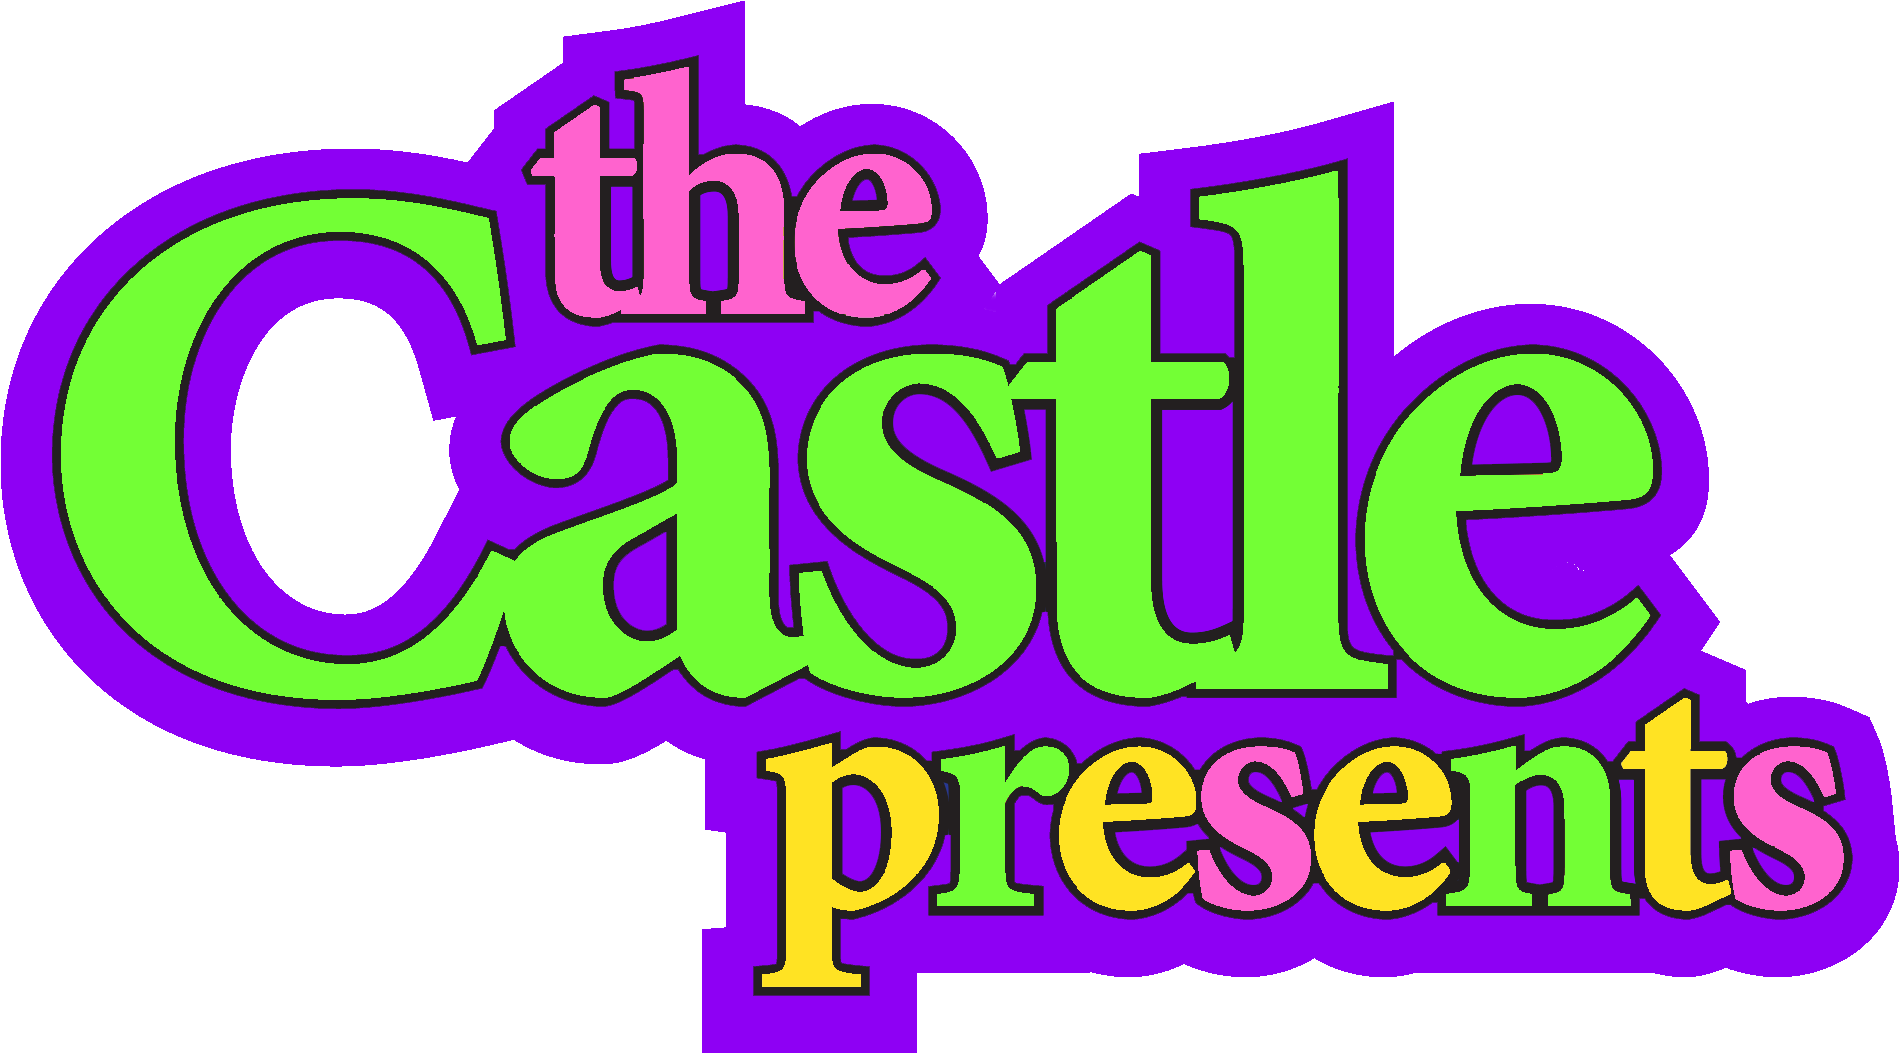 Tcp Logo For Mardi Gras - The Castle Presents (2160x1080)